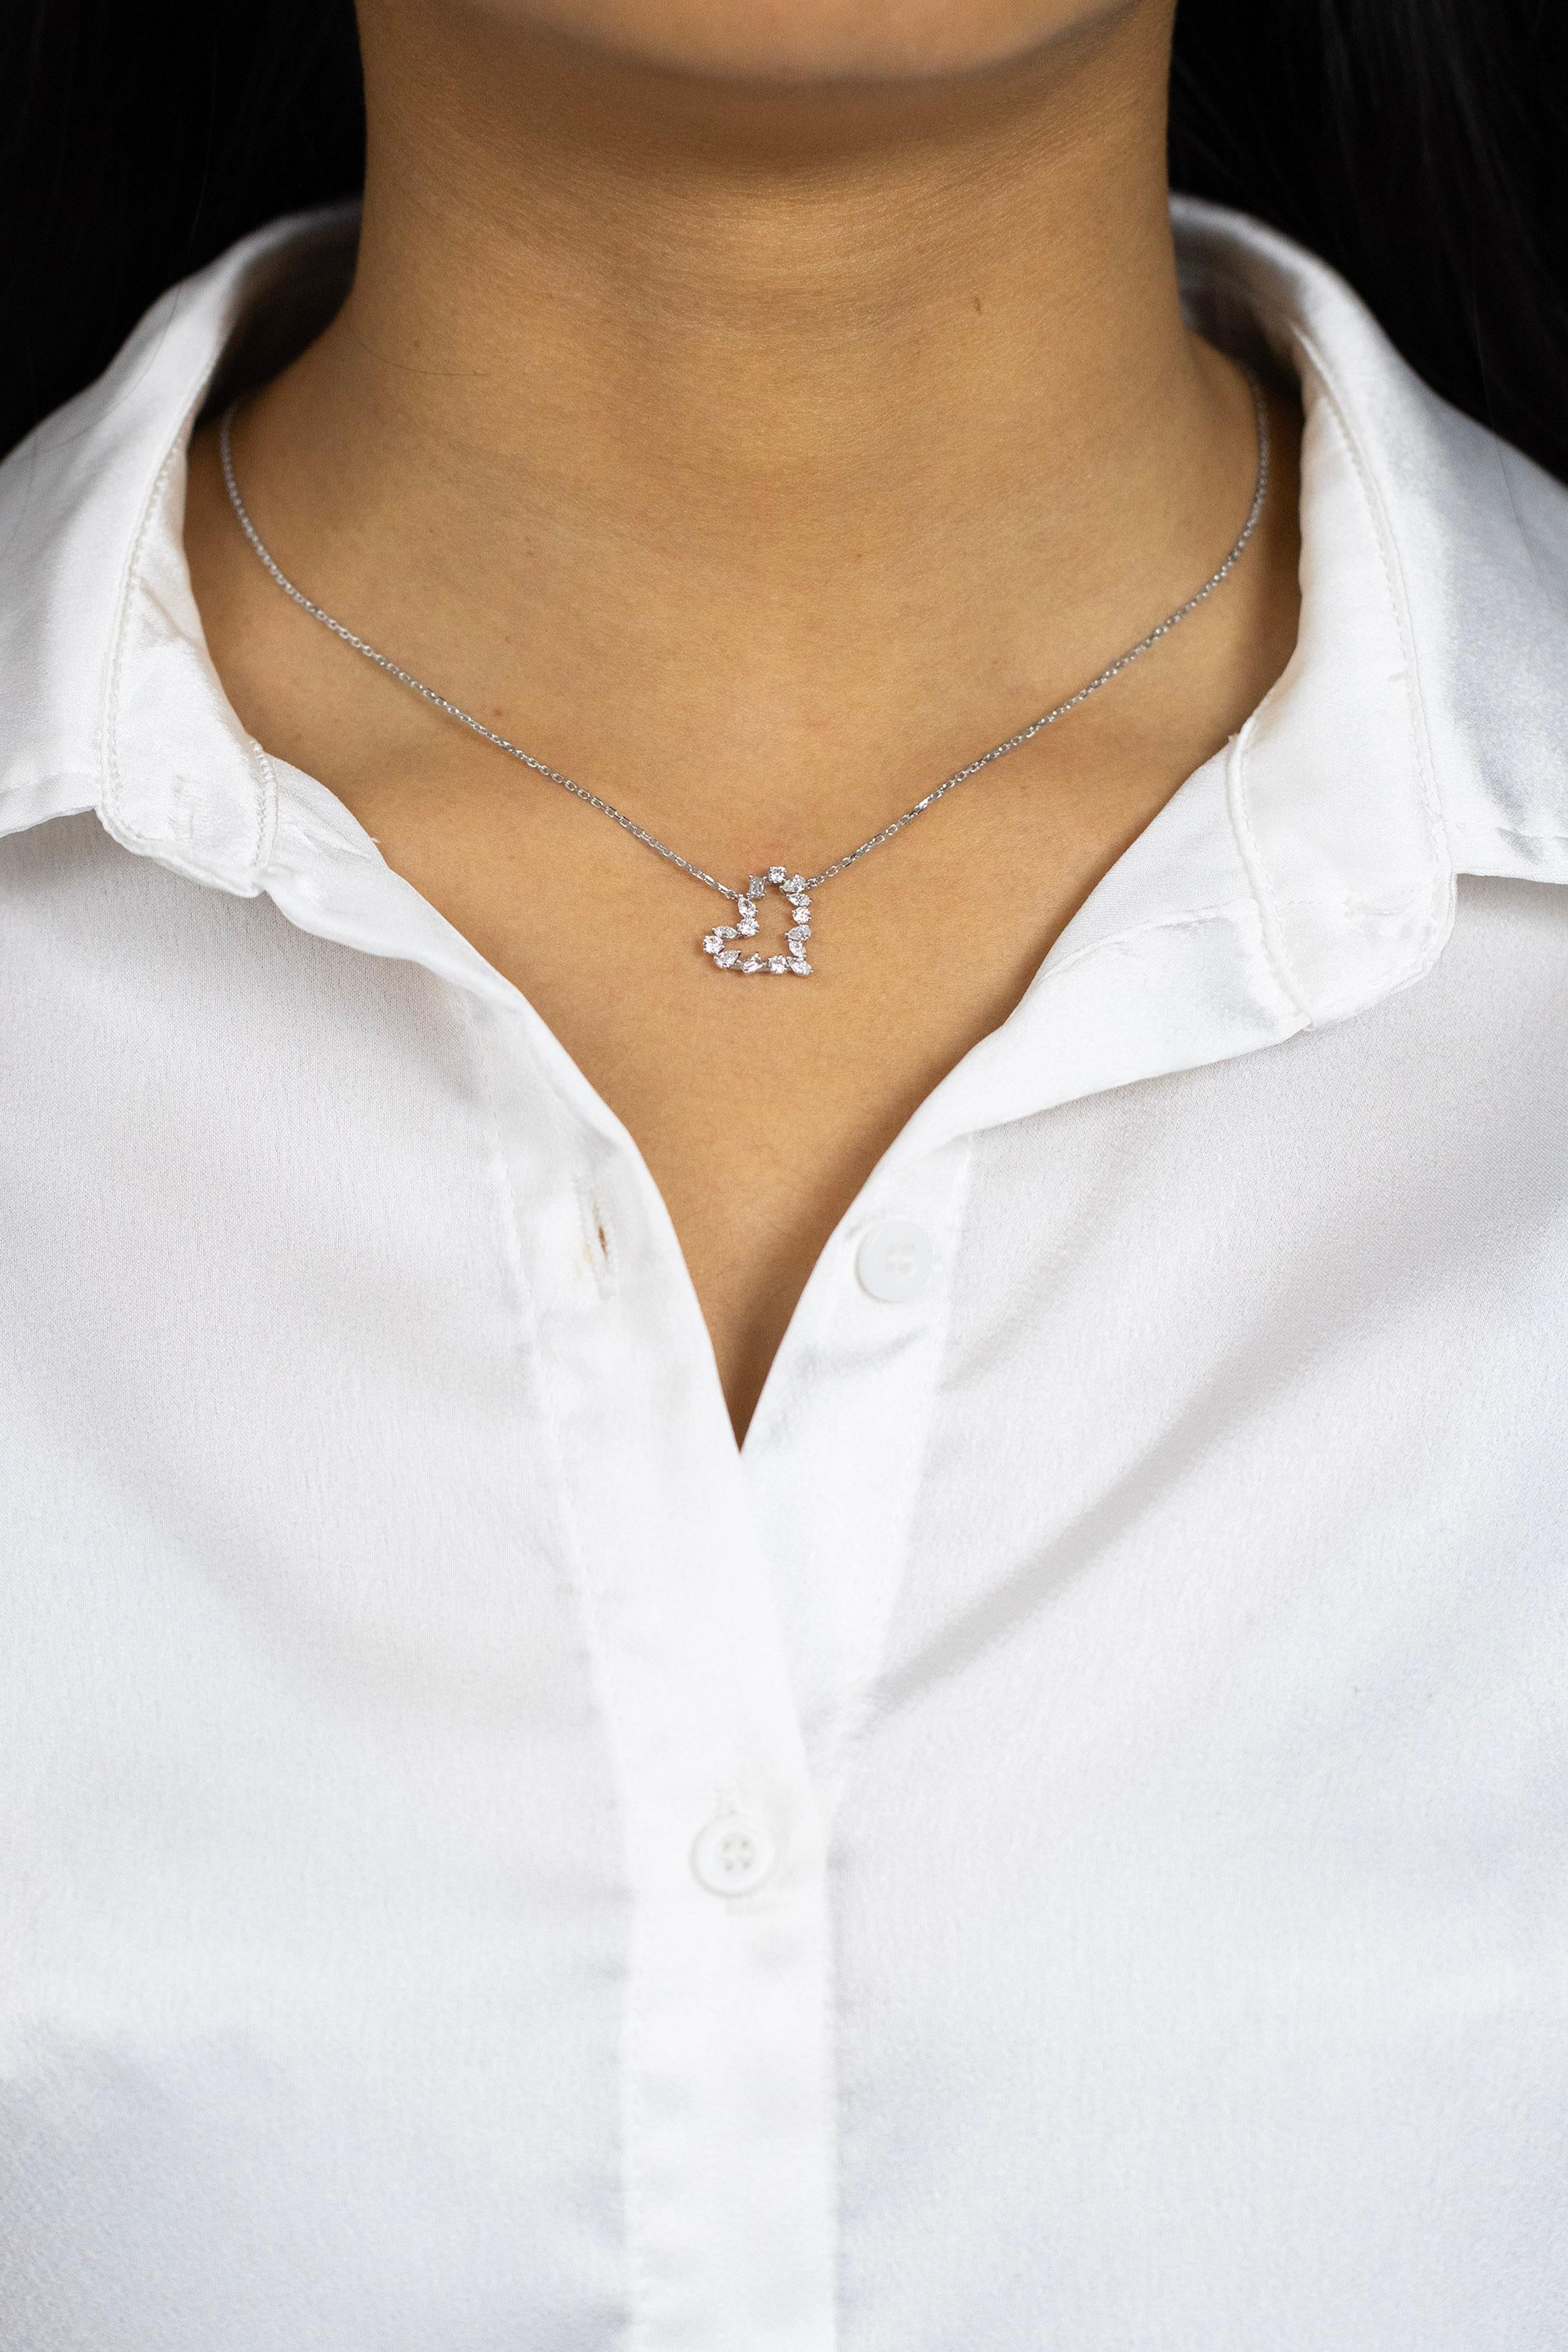 Contemporary Roman Malakov 0.79 Carats Total Fancy Cut Heart Shape Pendant Necklace For Sale